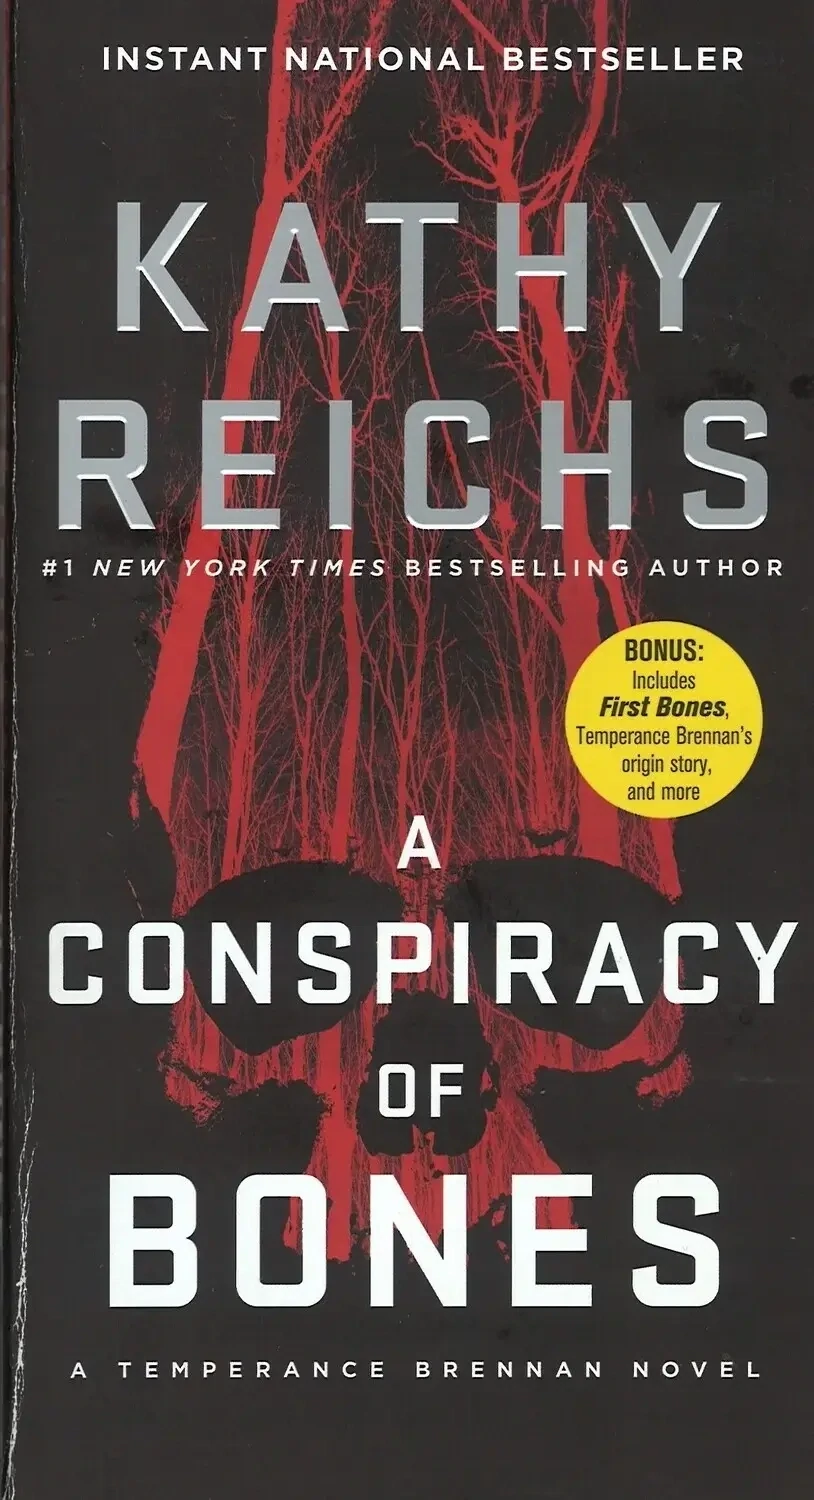 Conspiracy of Bones (Temperance Brennan) by Kathy Reichs